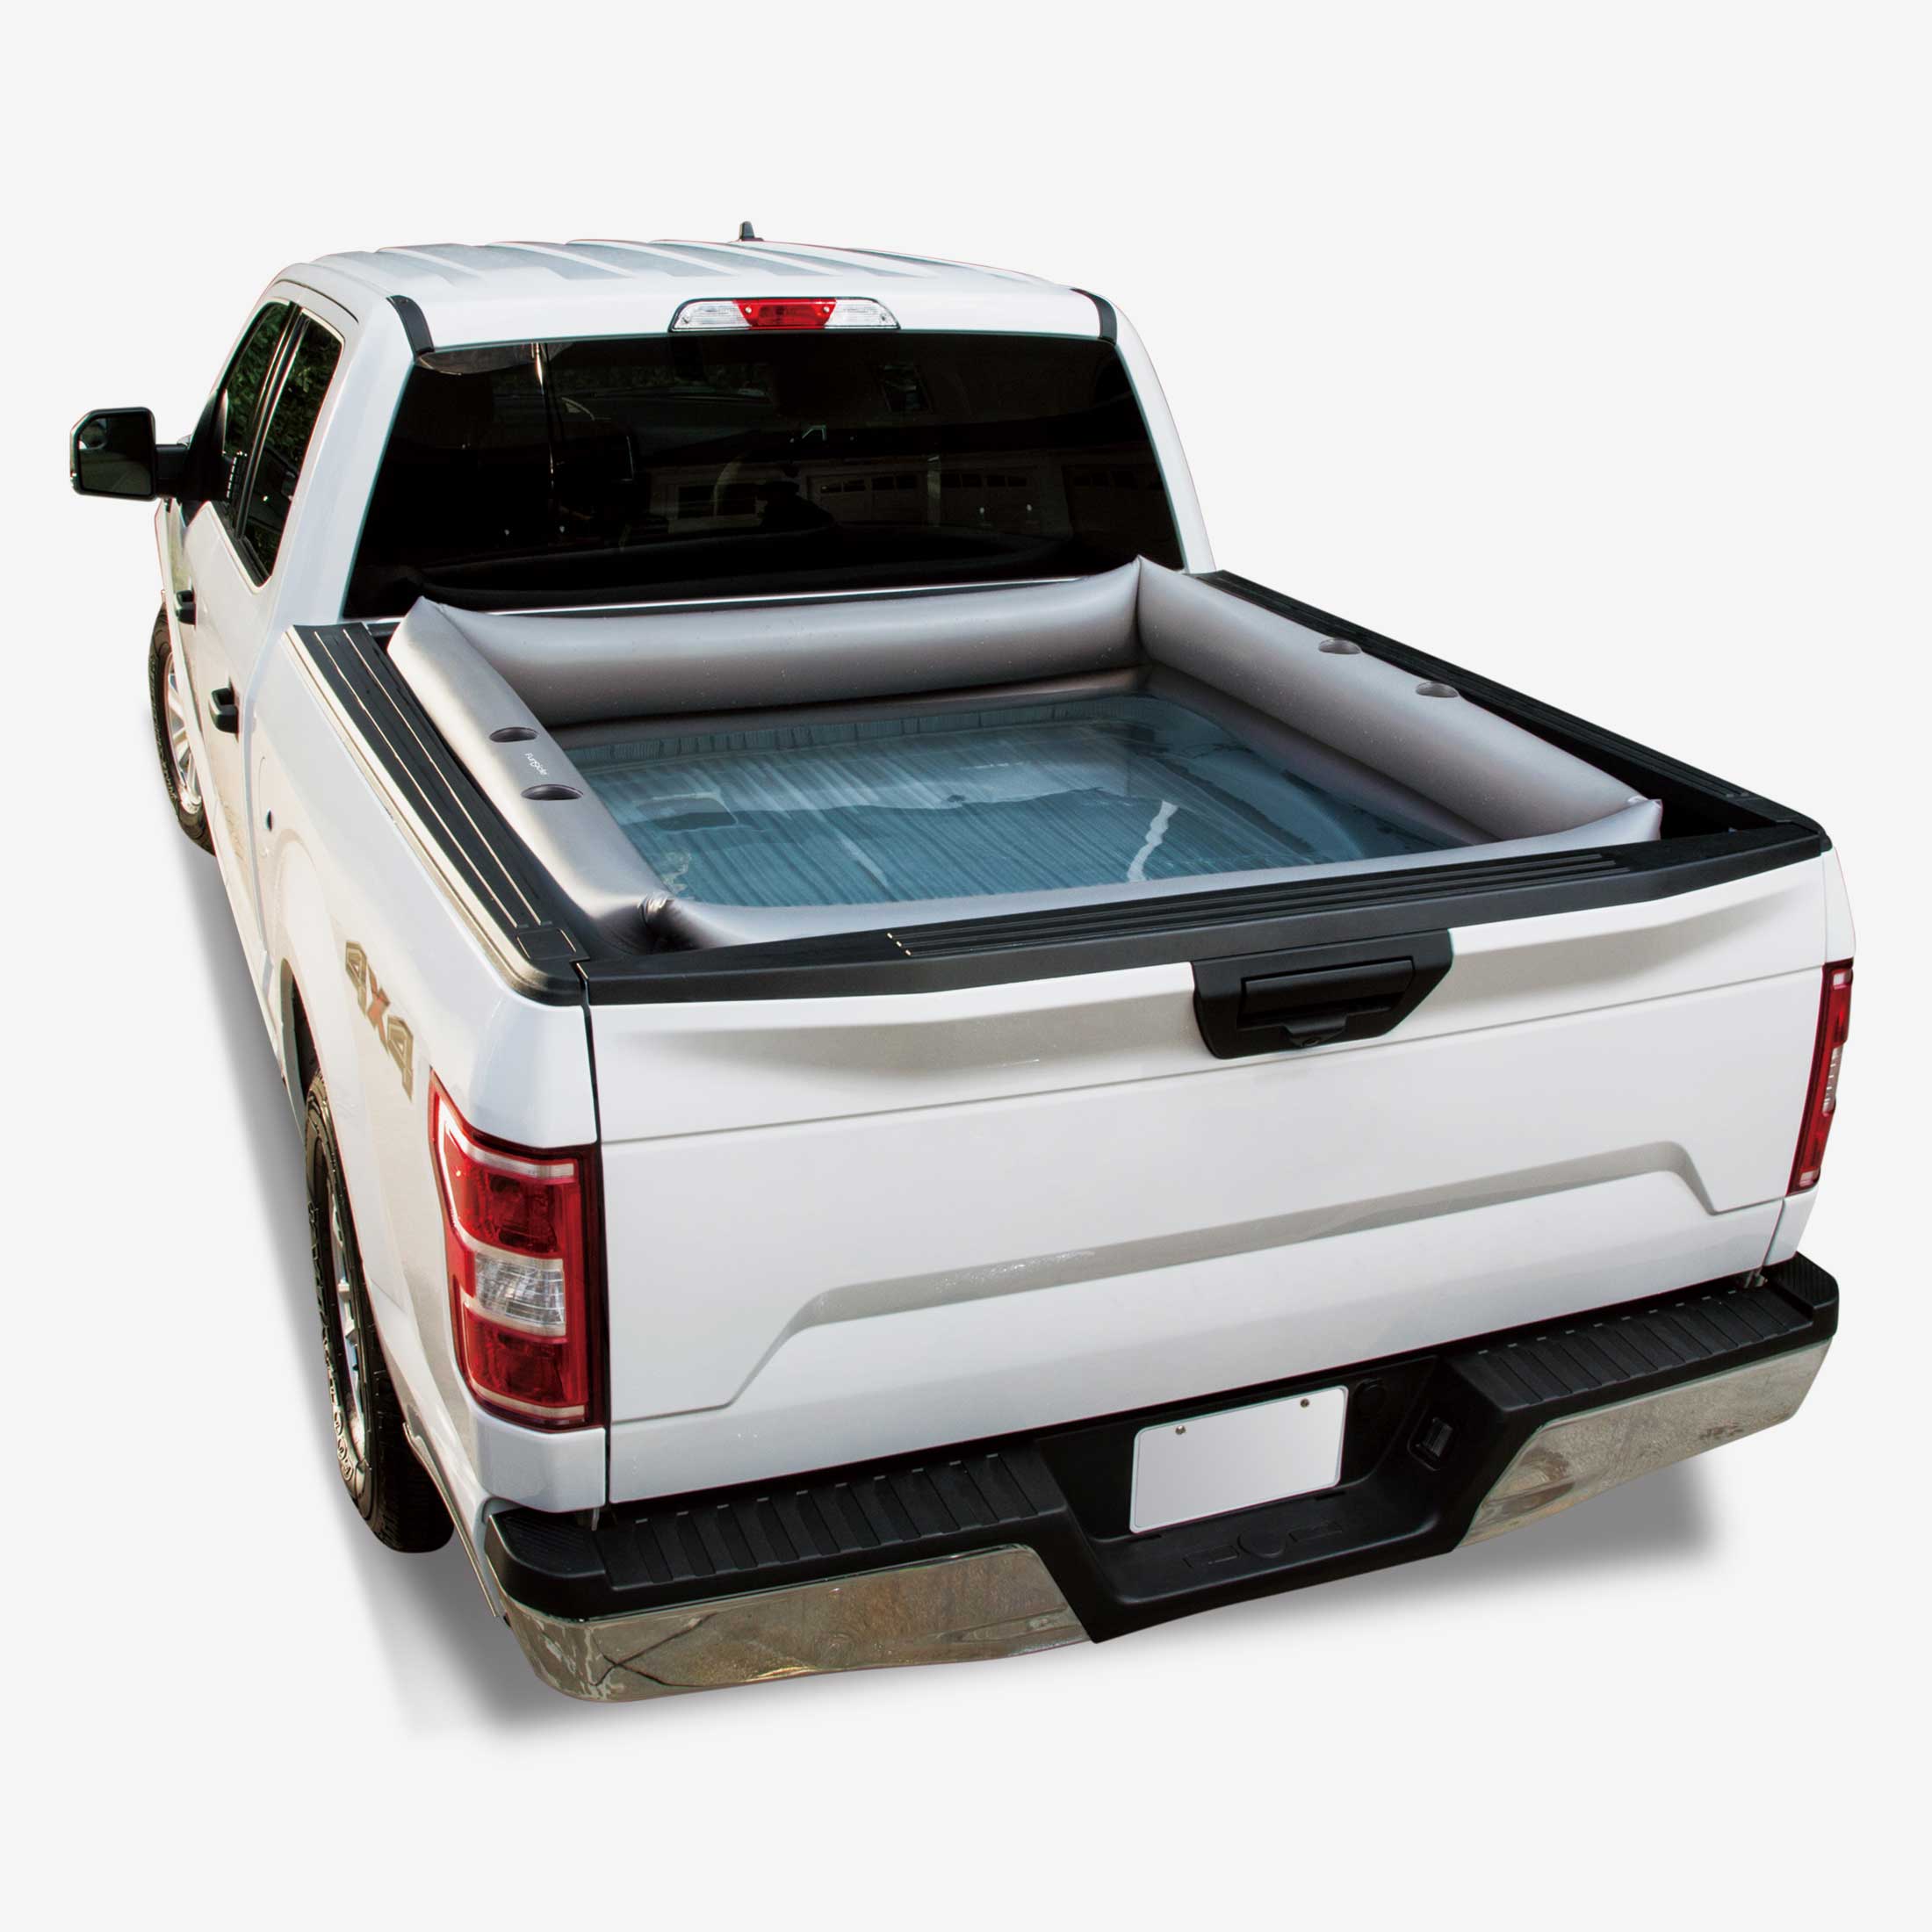 Funsicle Truck Bed Pool inside a pickup truck